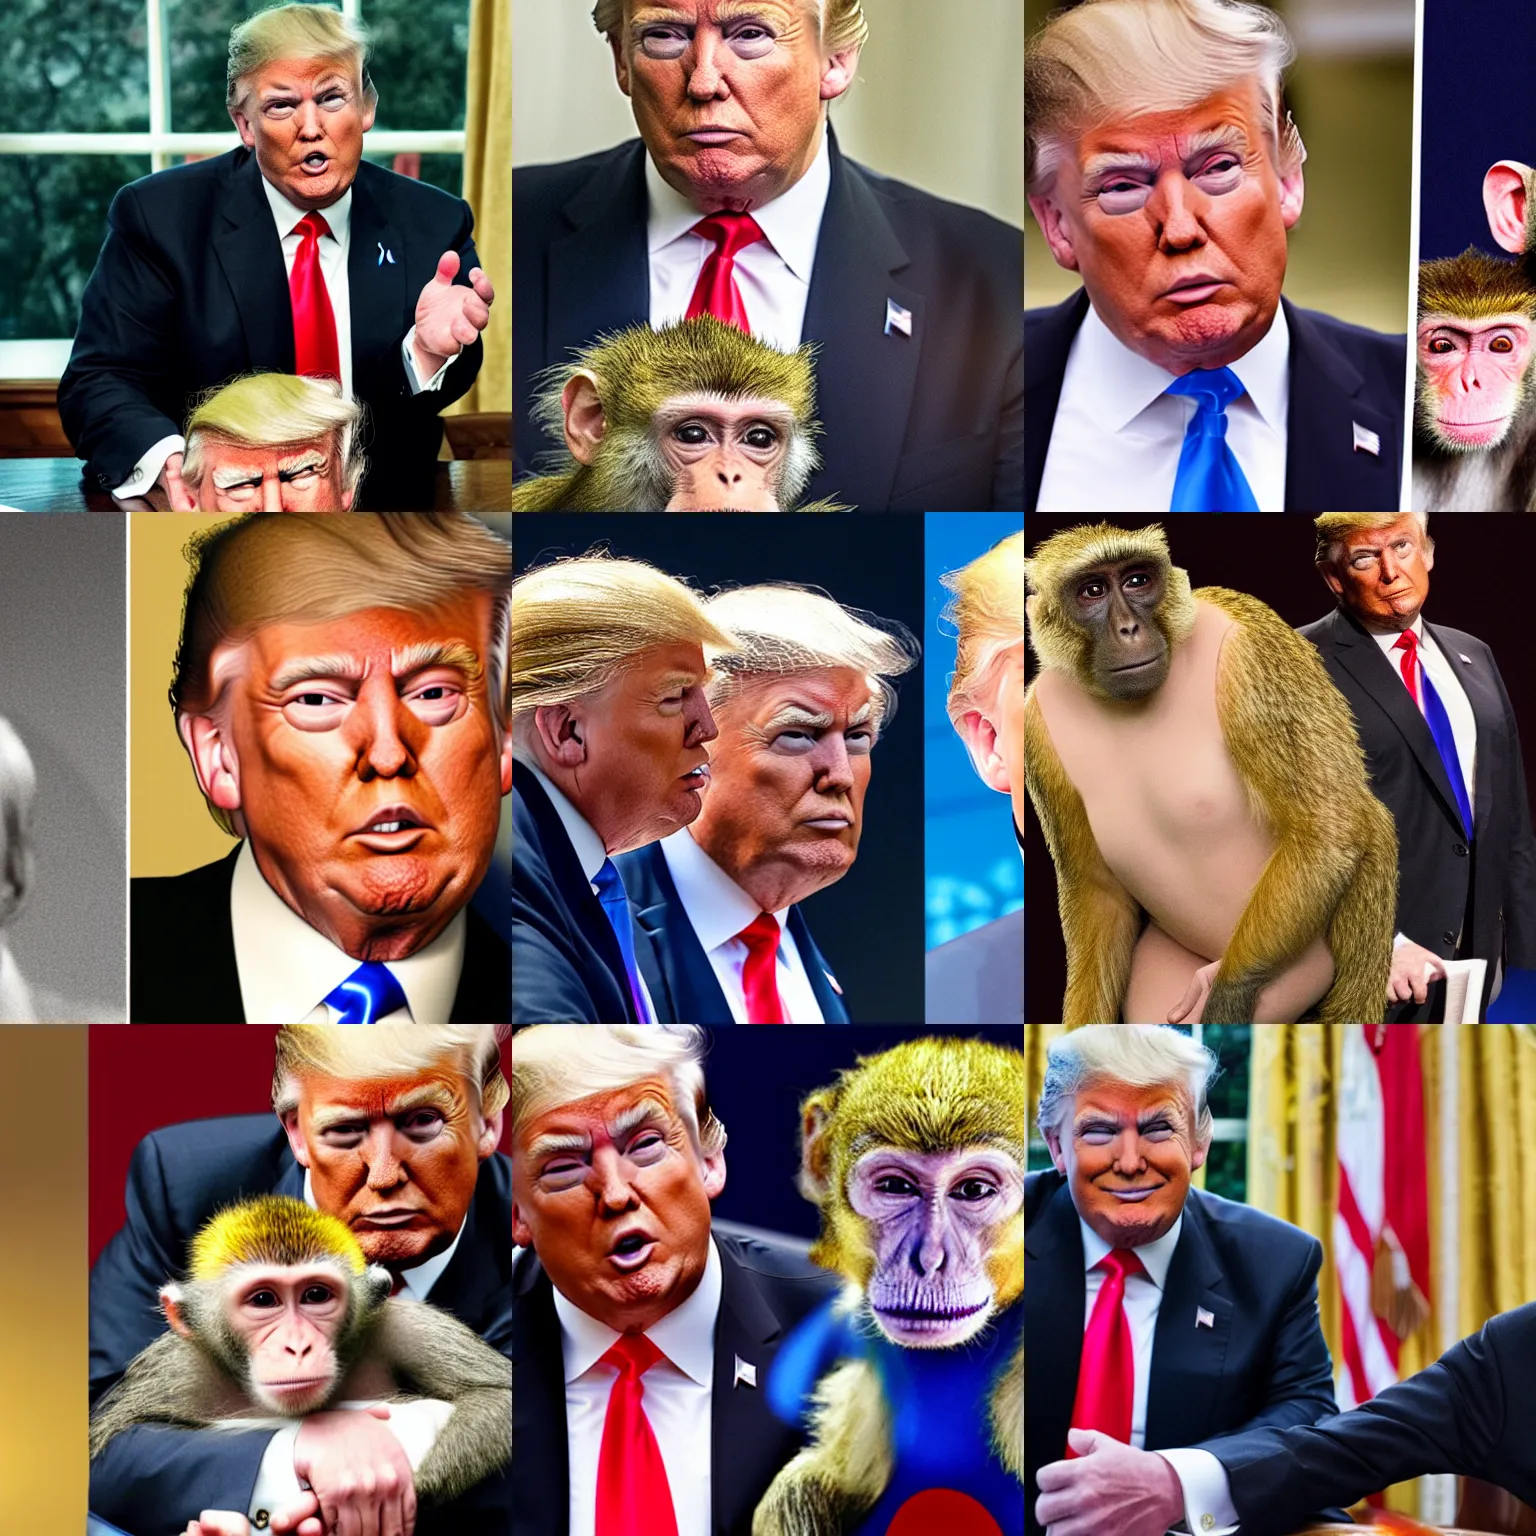 Prompt: Donald Trump with monkeypox